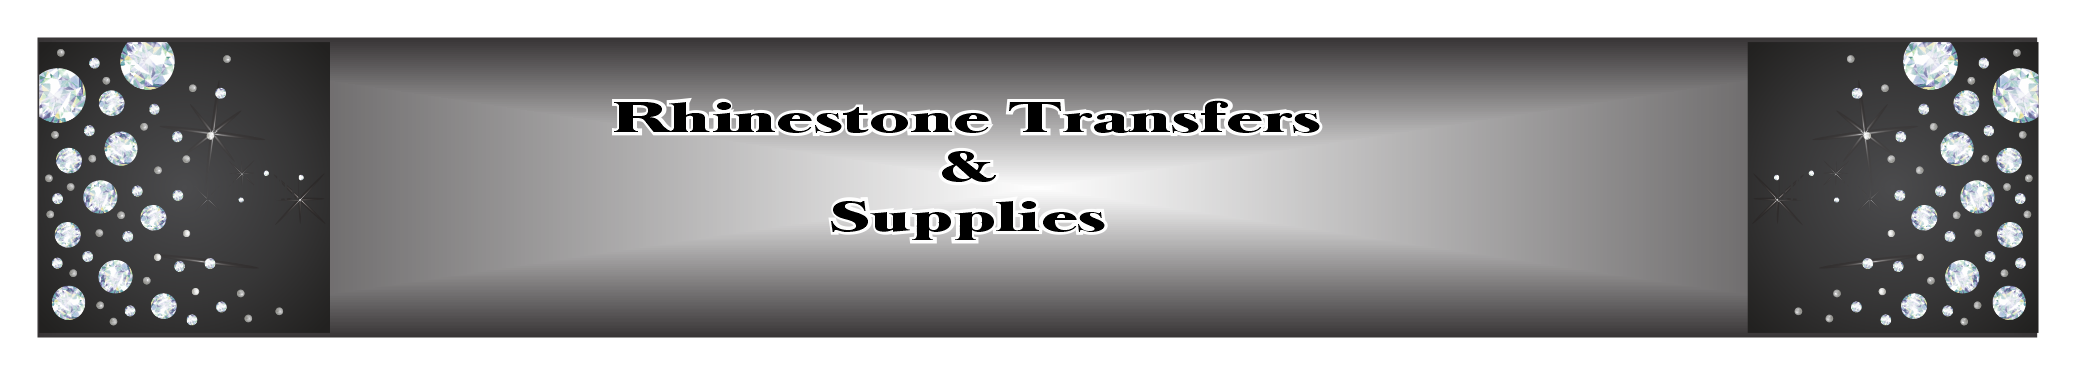 Rhinestone Transfer and Supplies